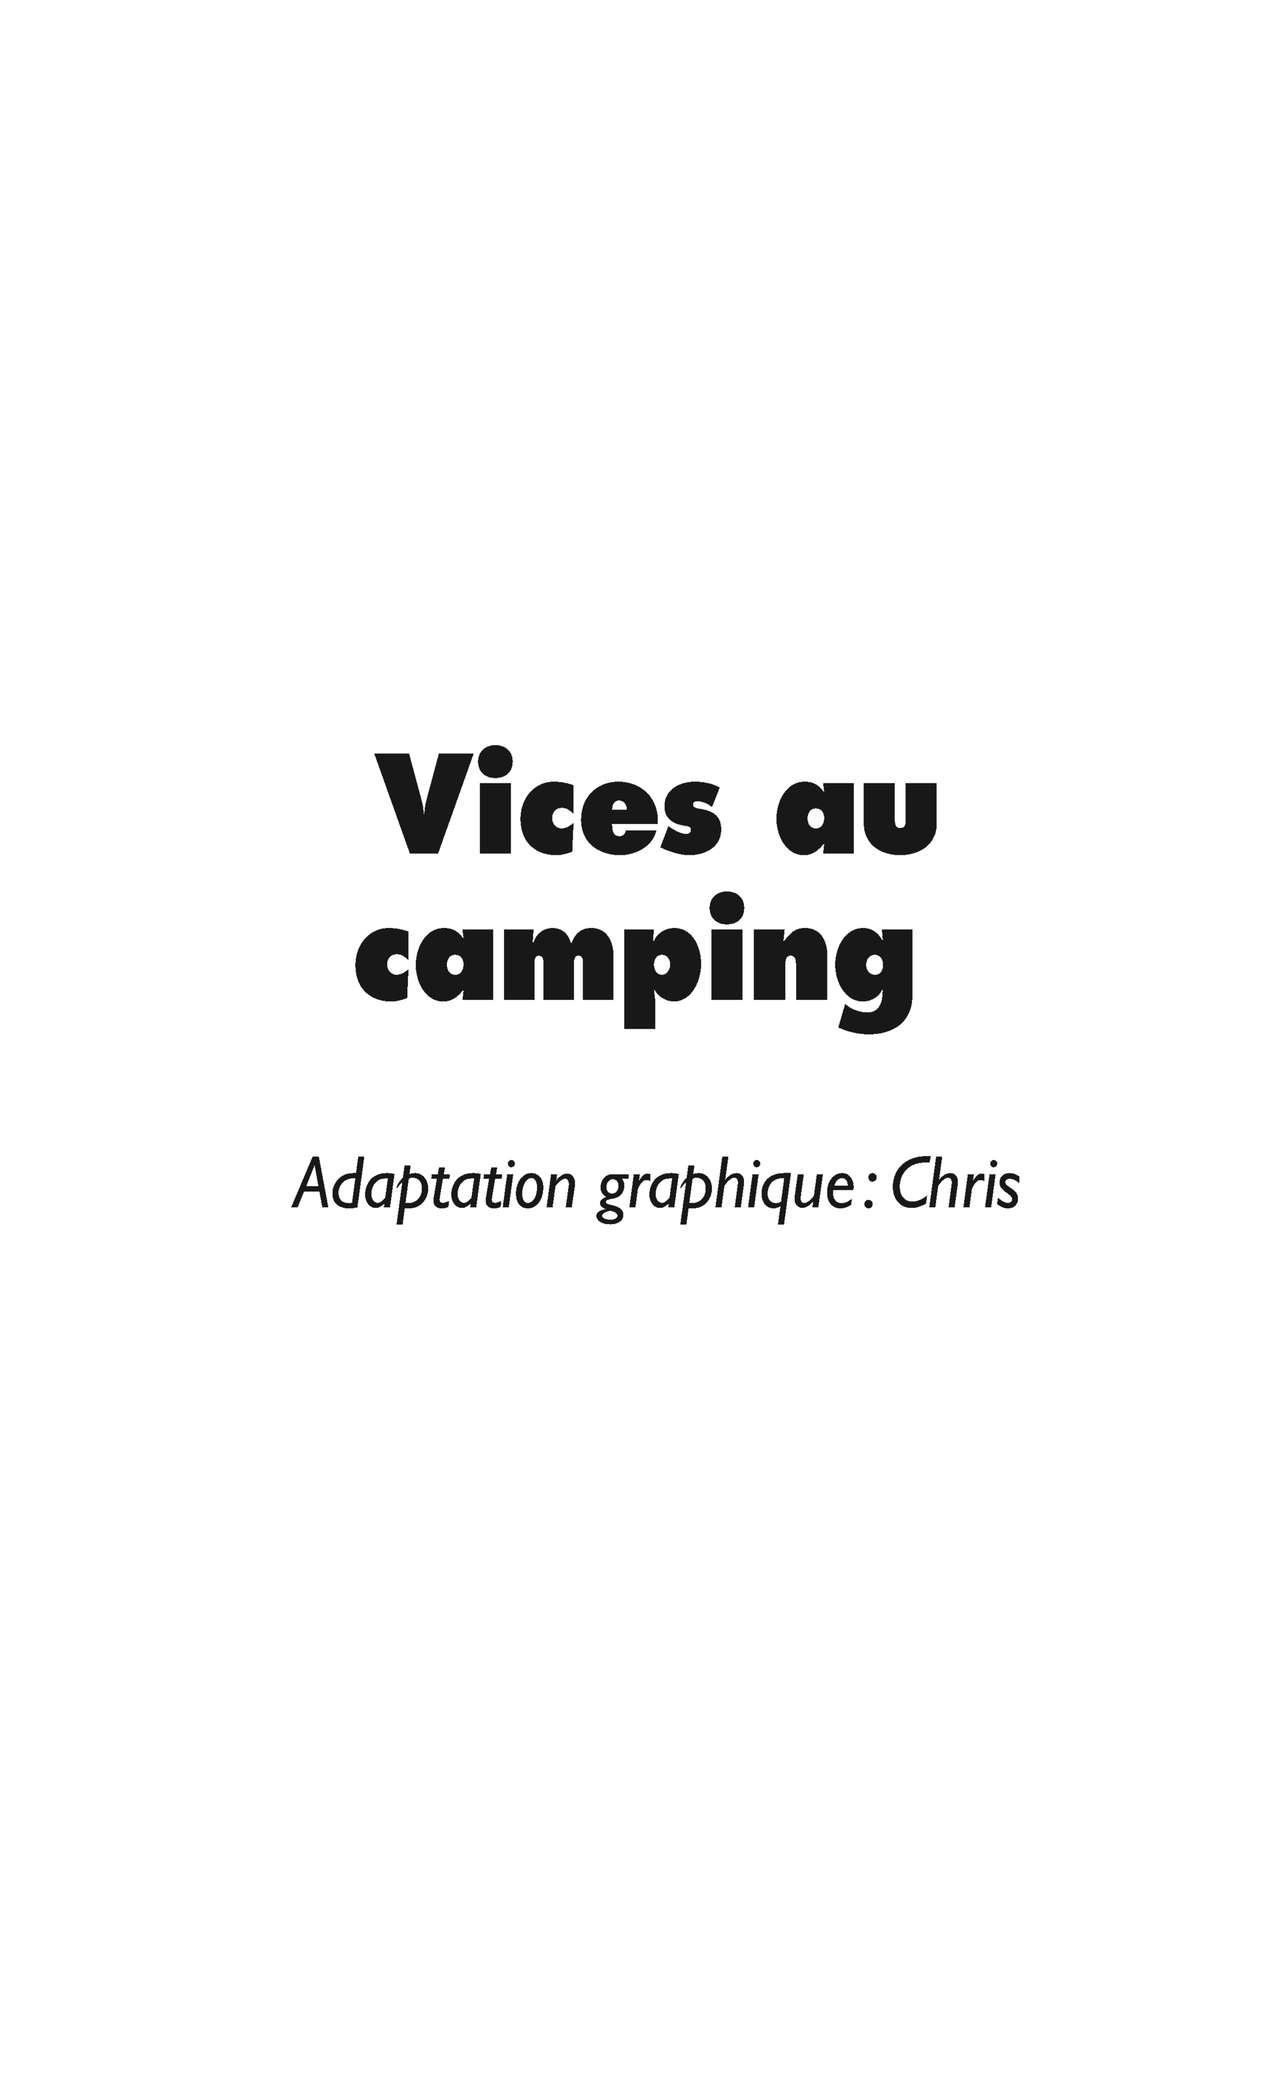 Vice au camping numero d'image 3